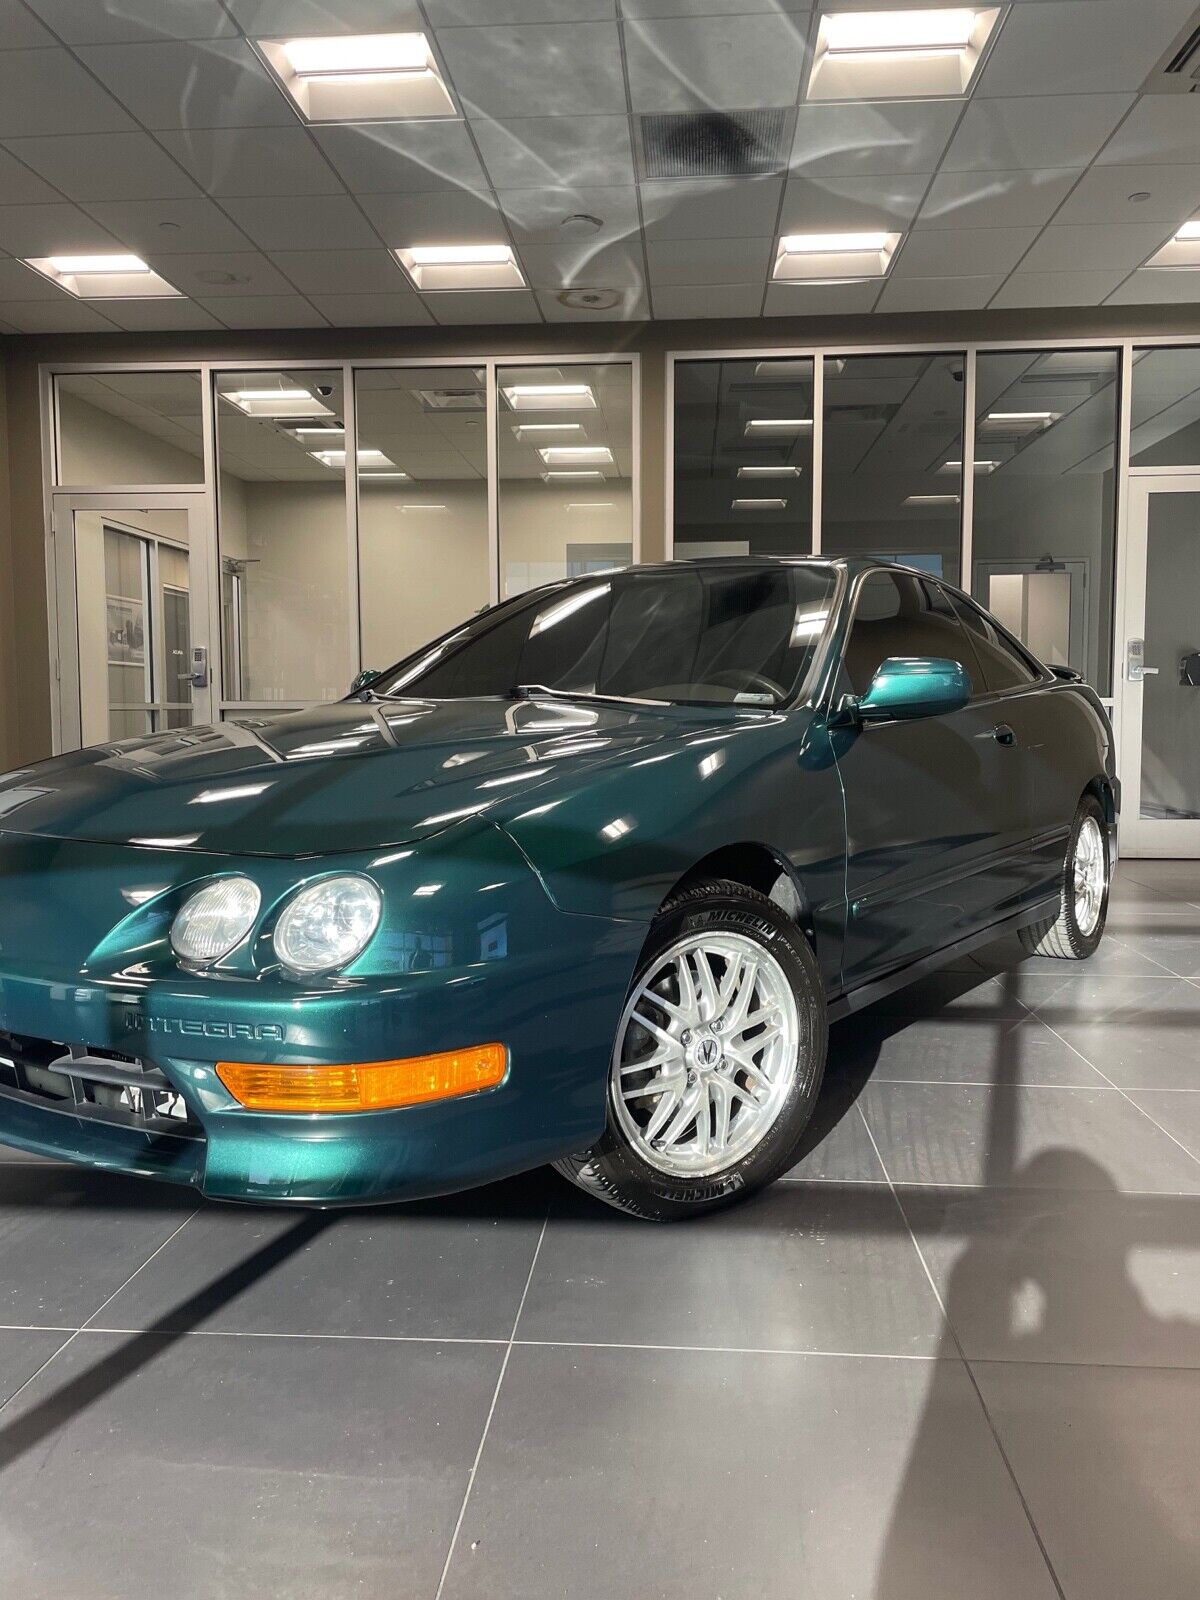 2000 Acura Integra Gs